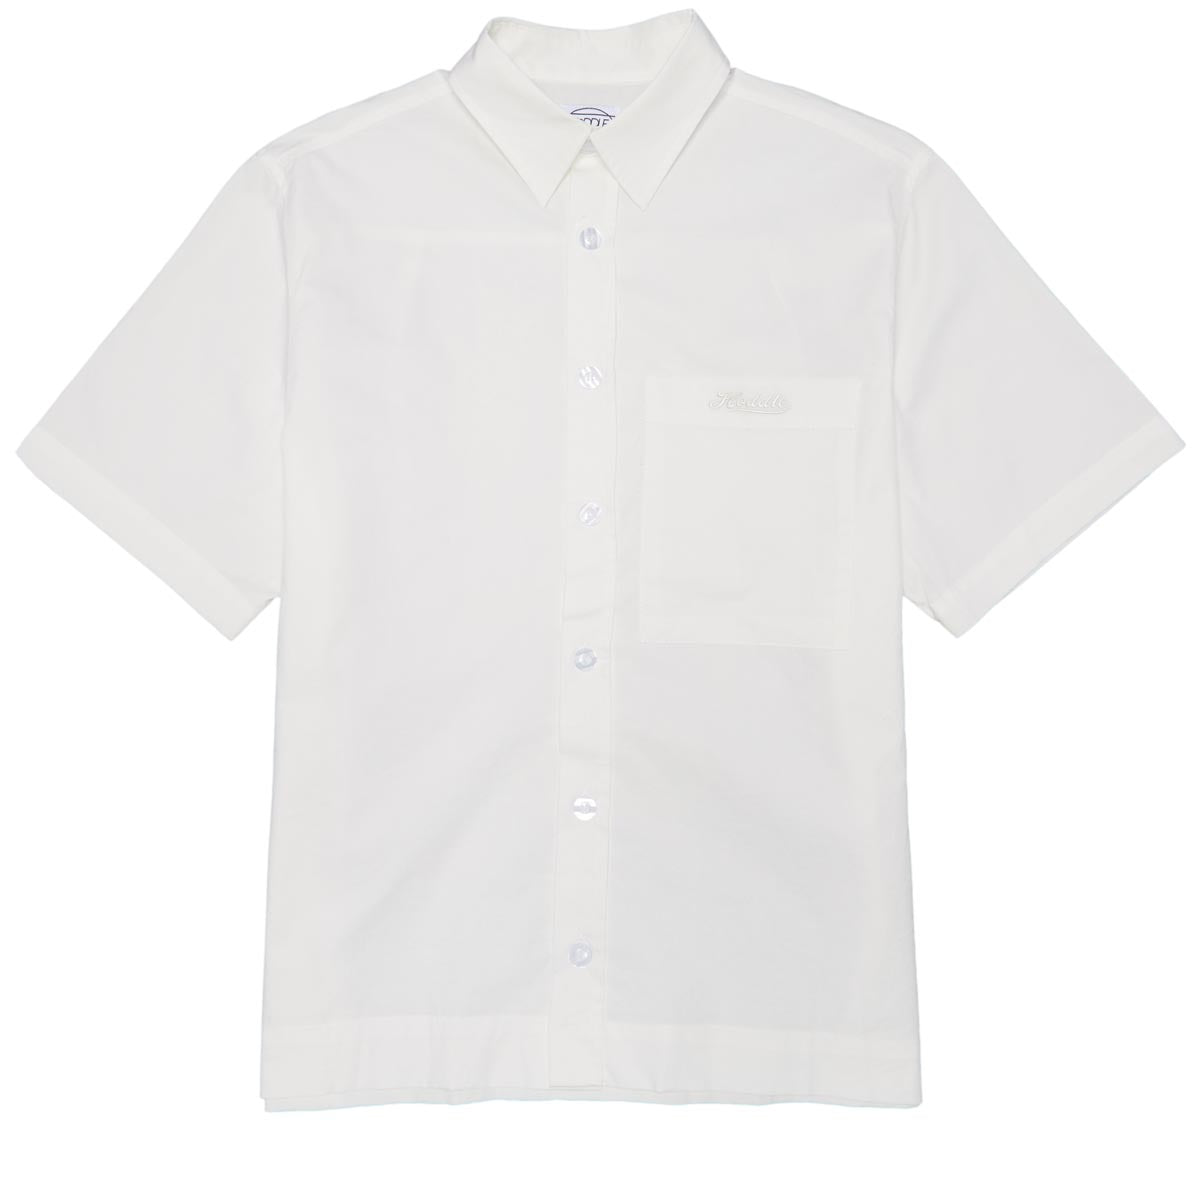 Hoddle Cheval Shirt - White image 1